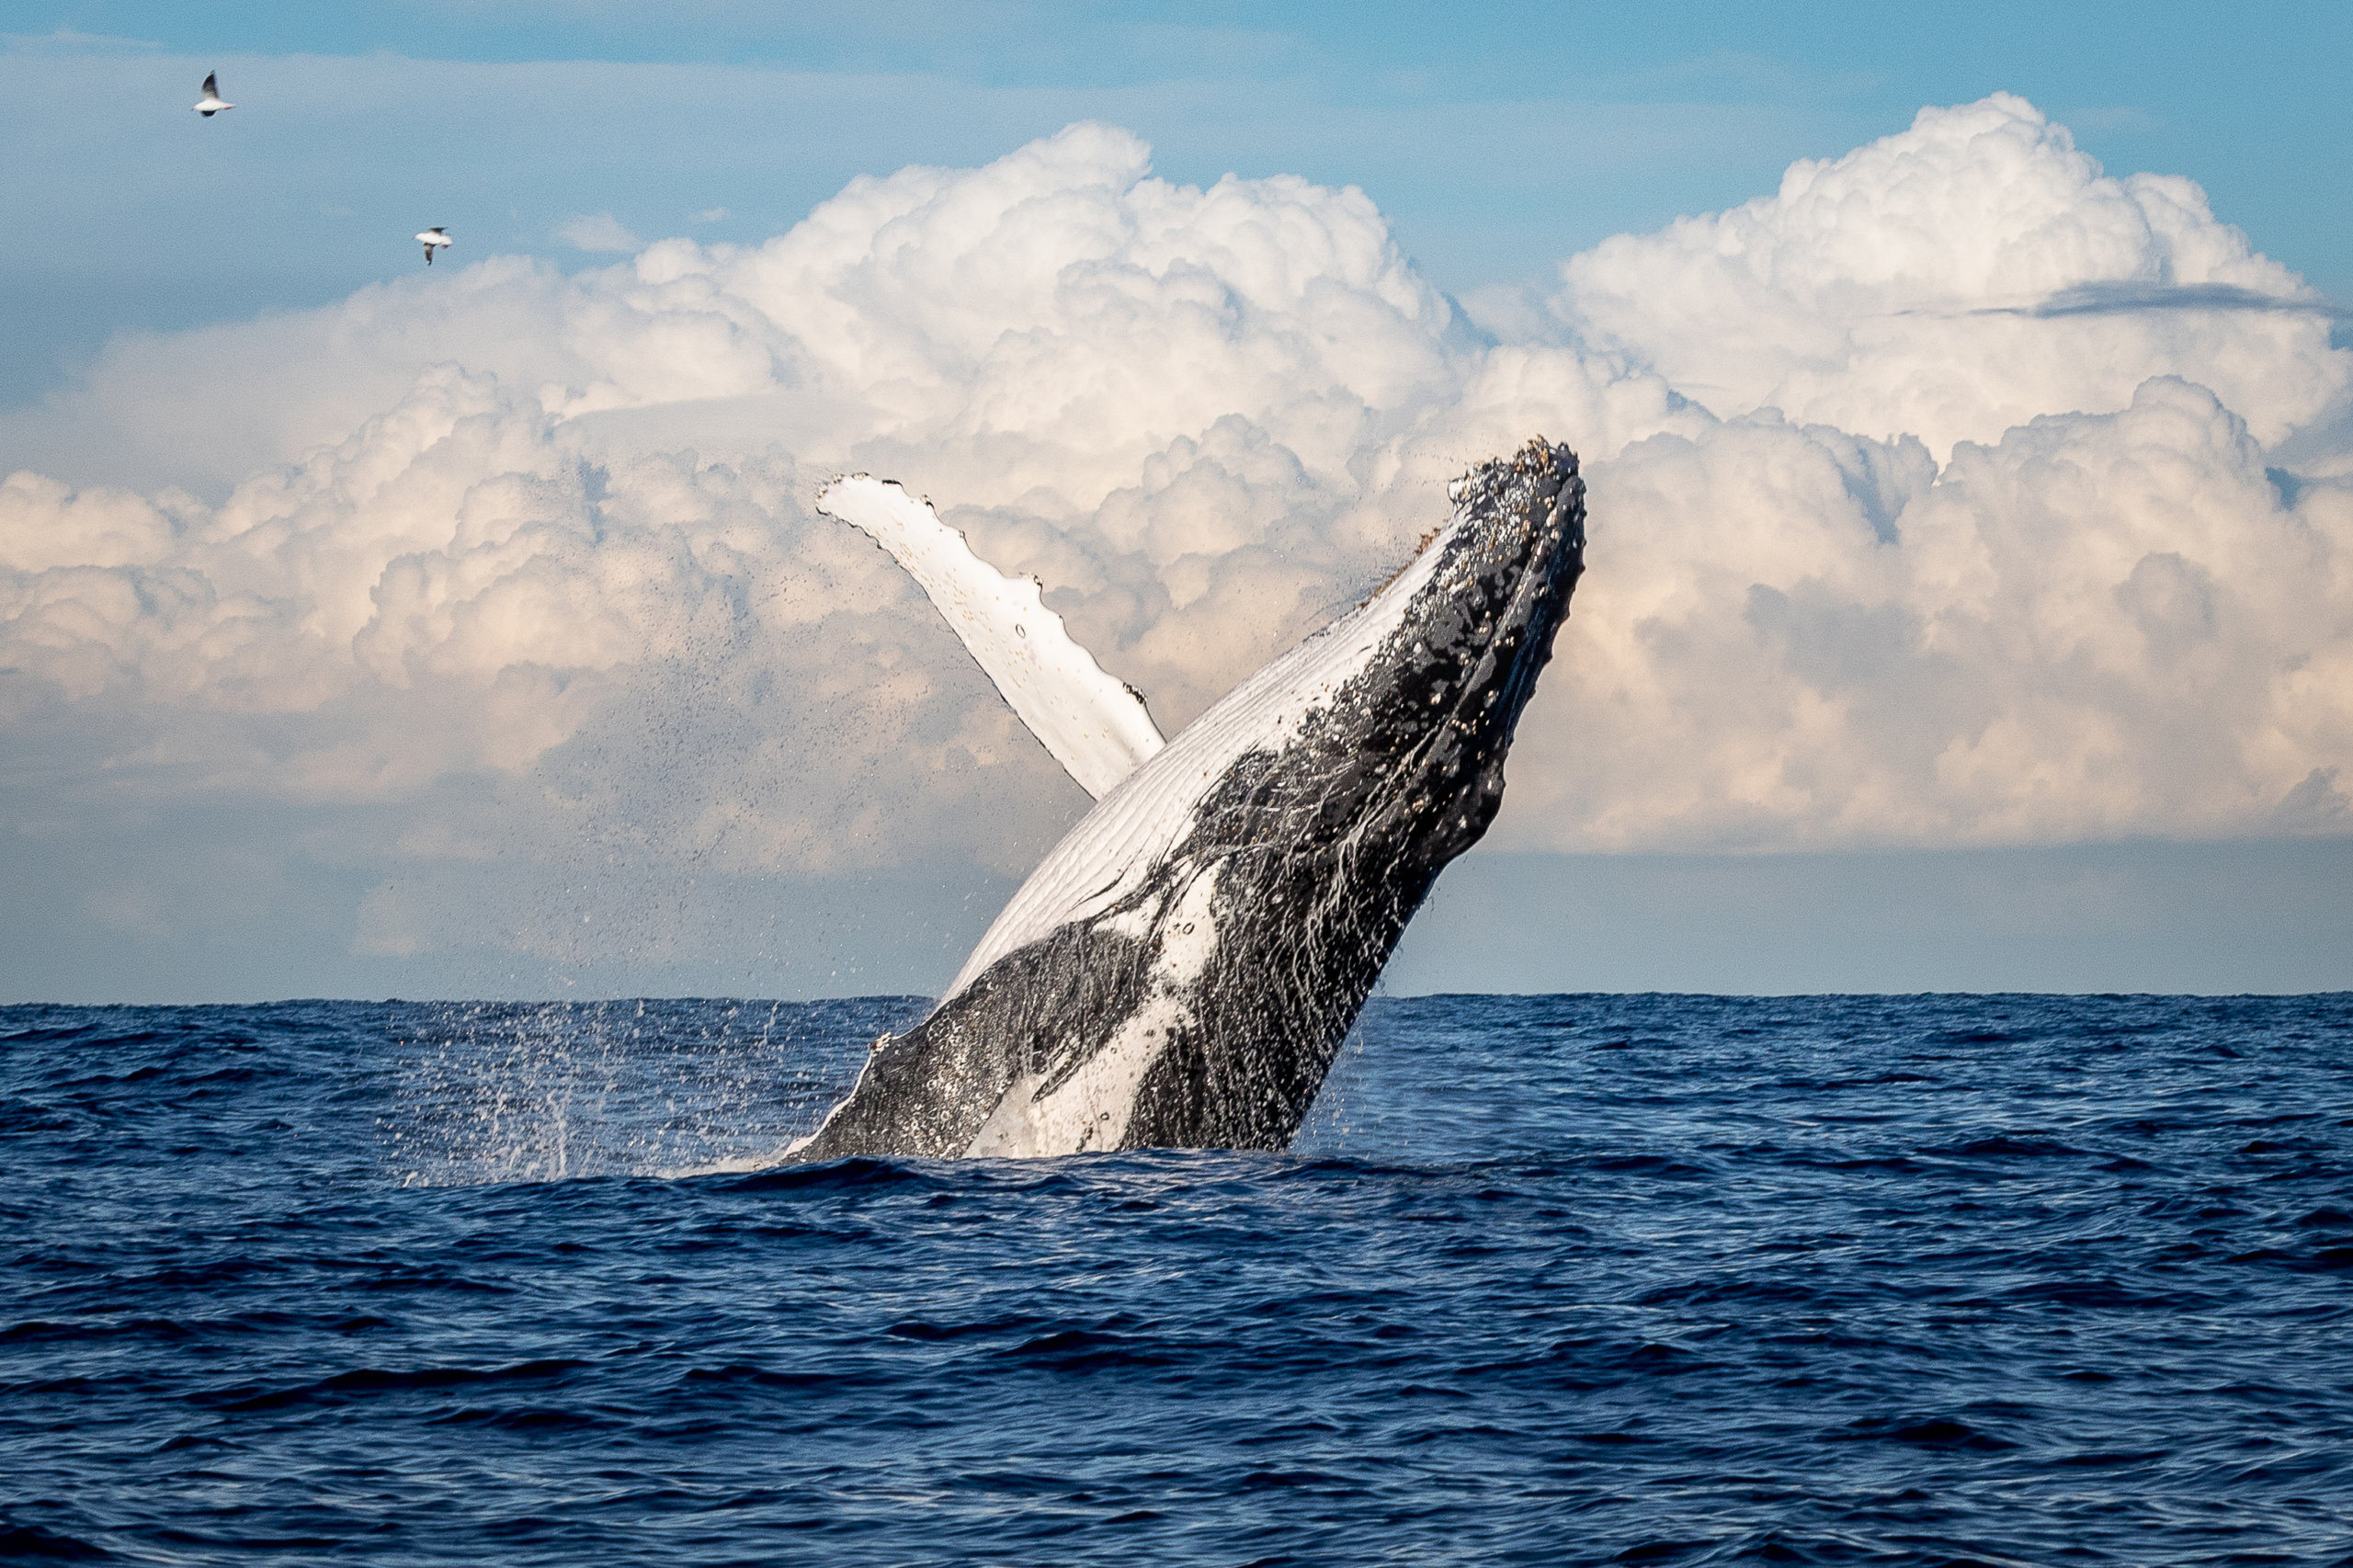 East End Yaz Maceraları - Montauk'u izleyen balina!  Kambur balina ihlali